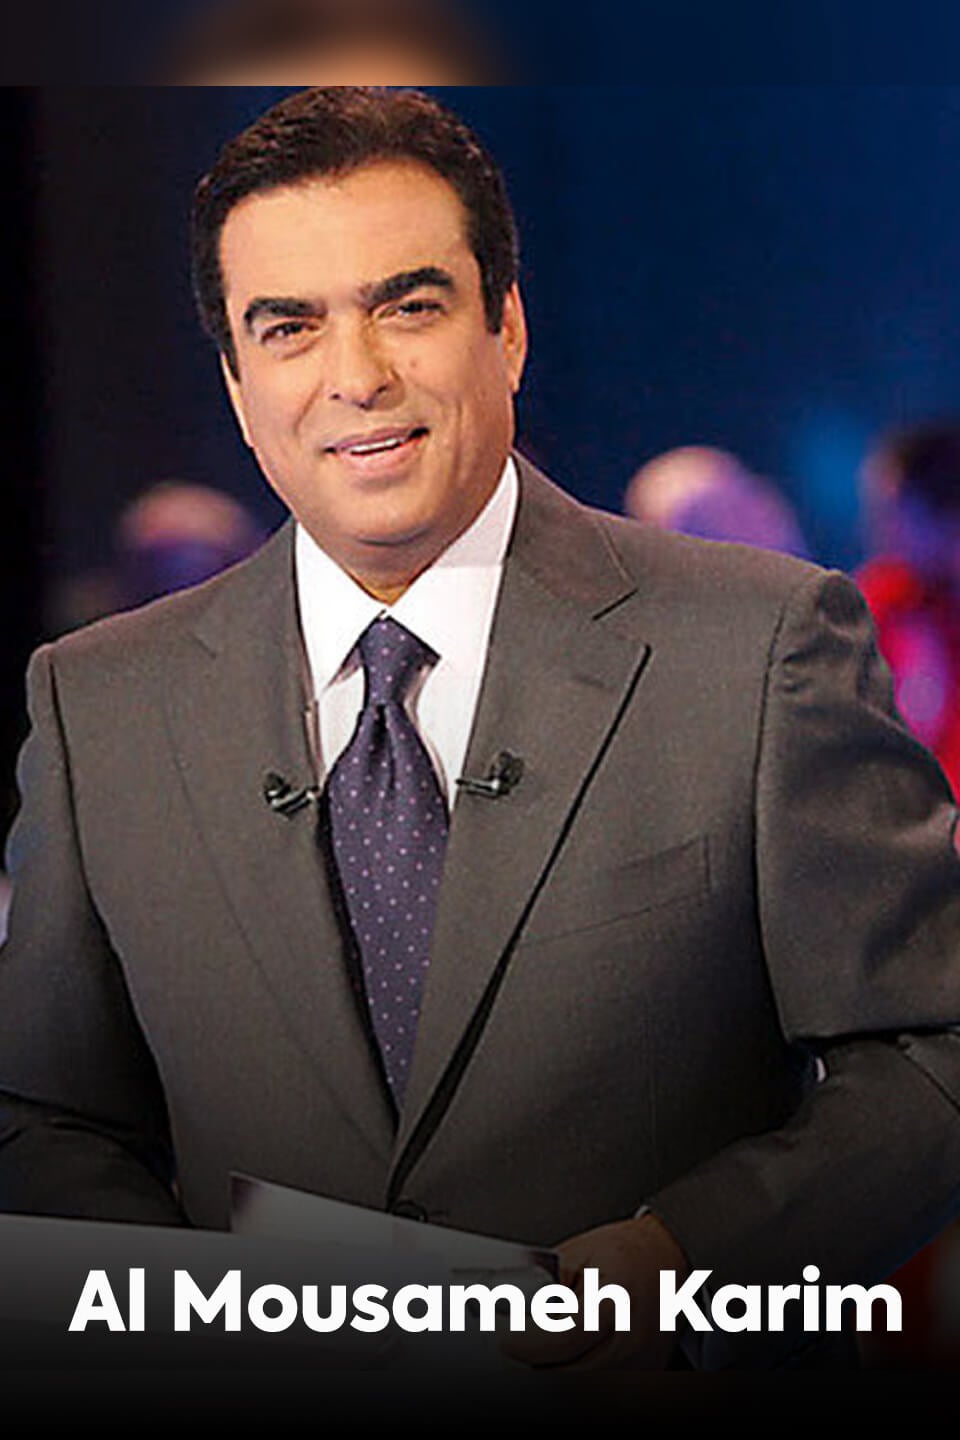 TV ratings for Al Mousameh Karim (المسامح كريم) in Brazil. OSN TV series